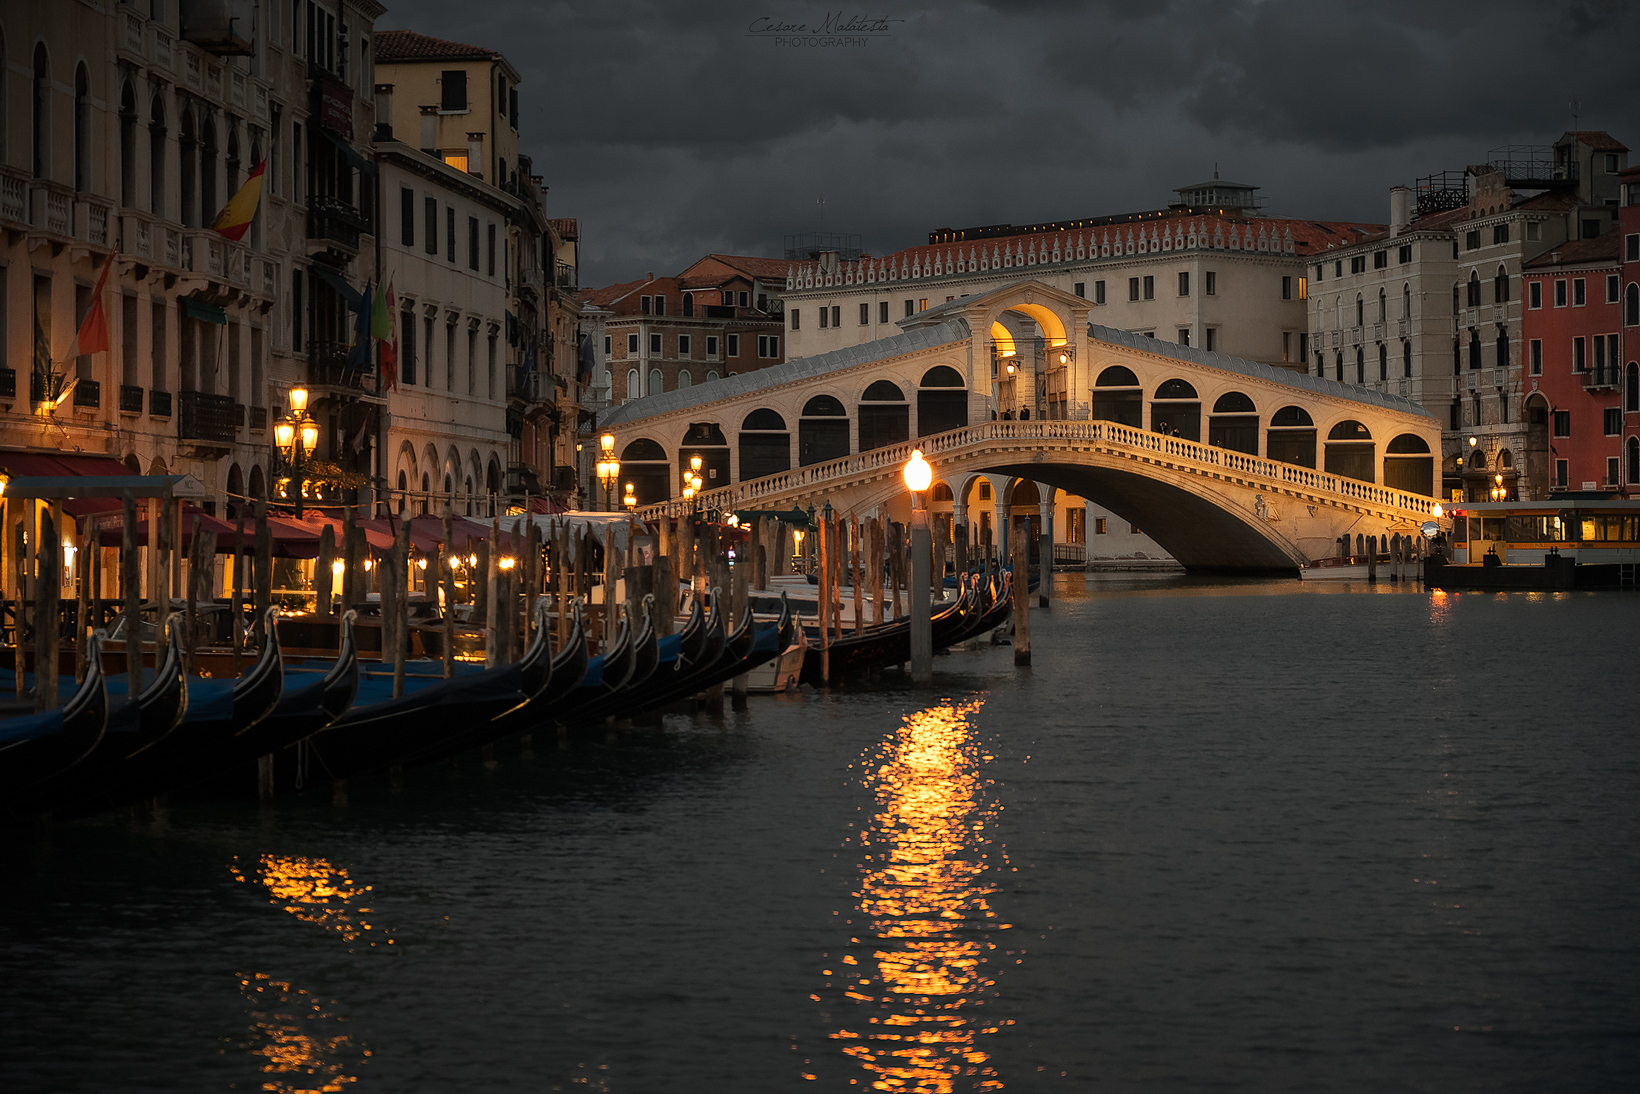 The magic of Venice...